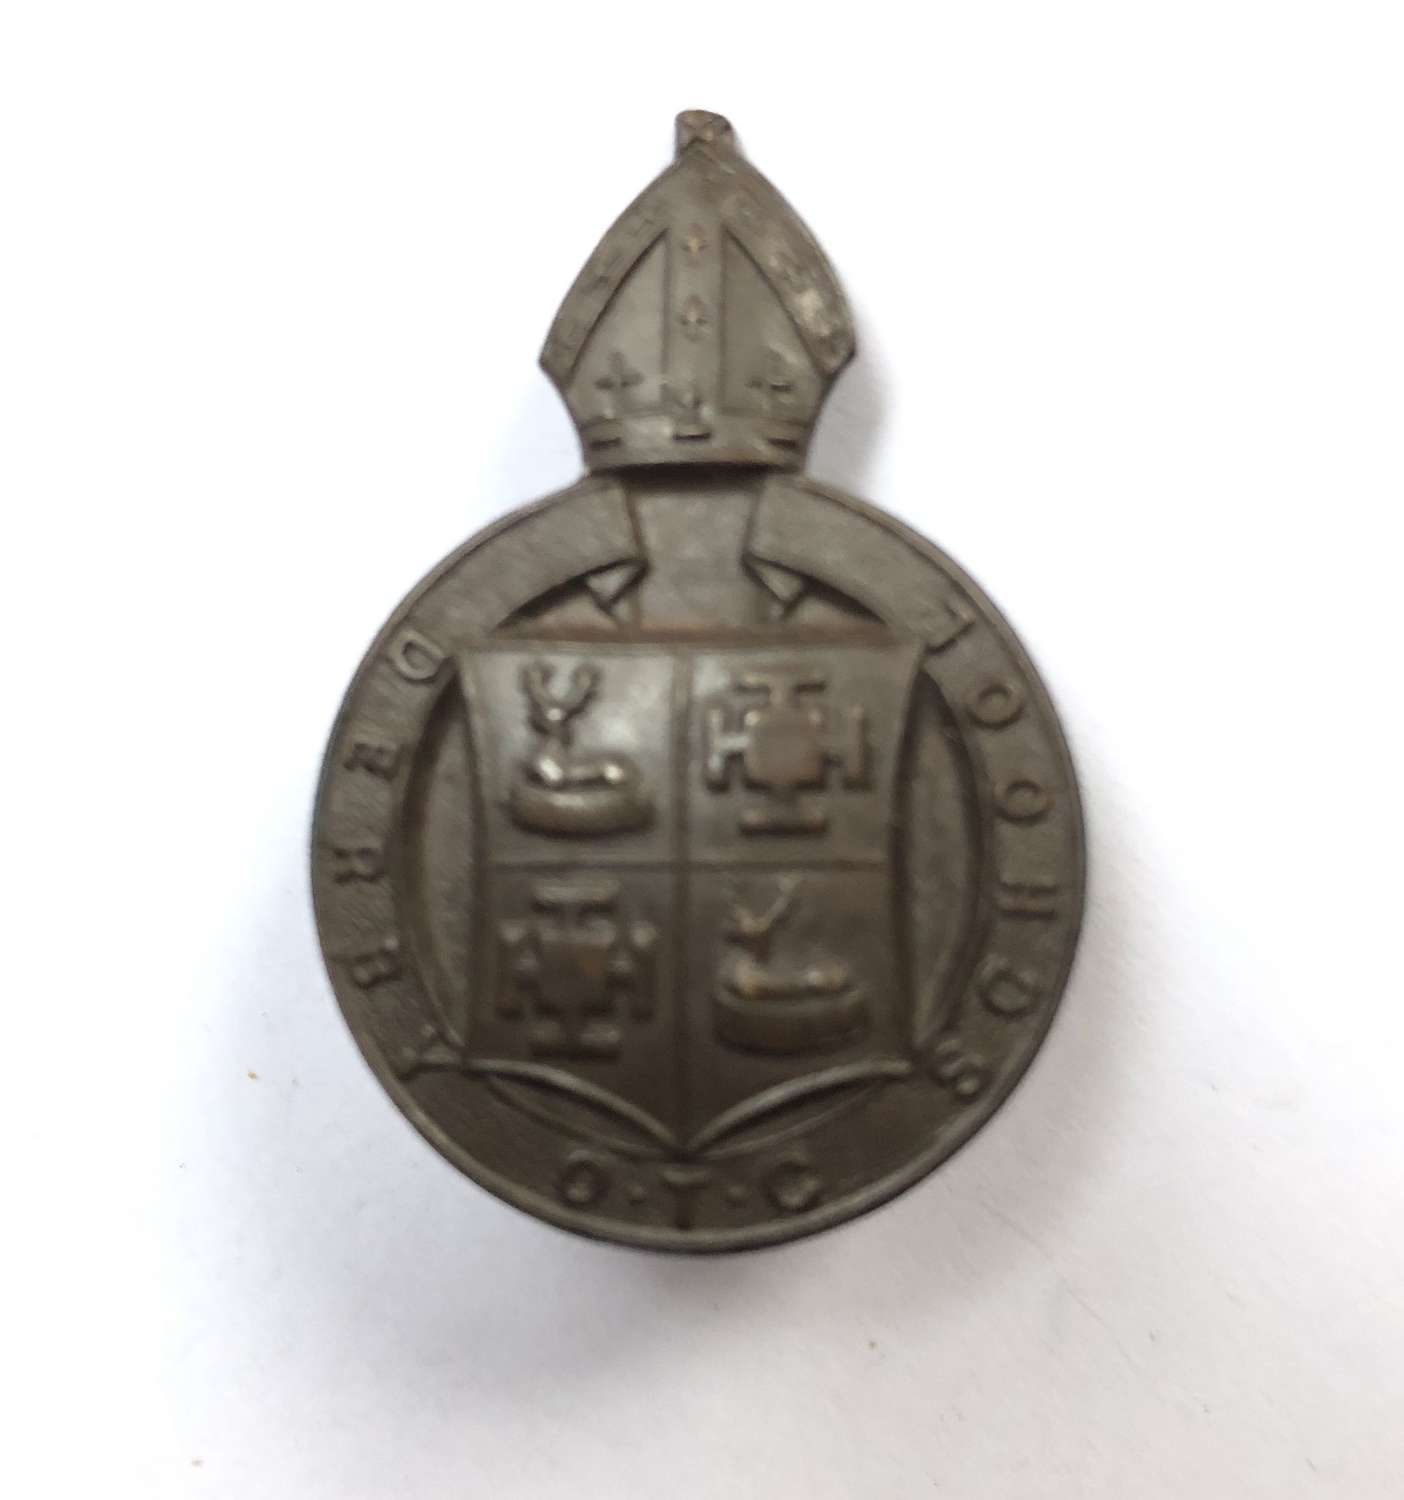 Derby School OTC cap badge circa 1908-40